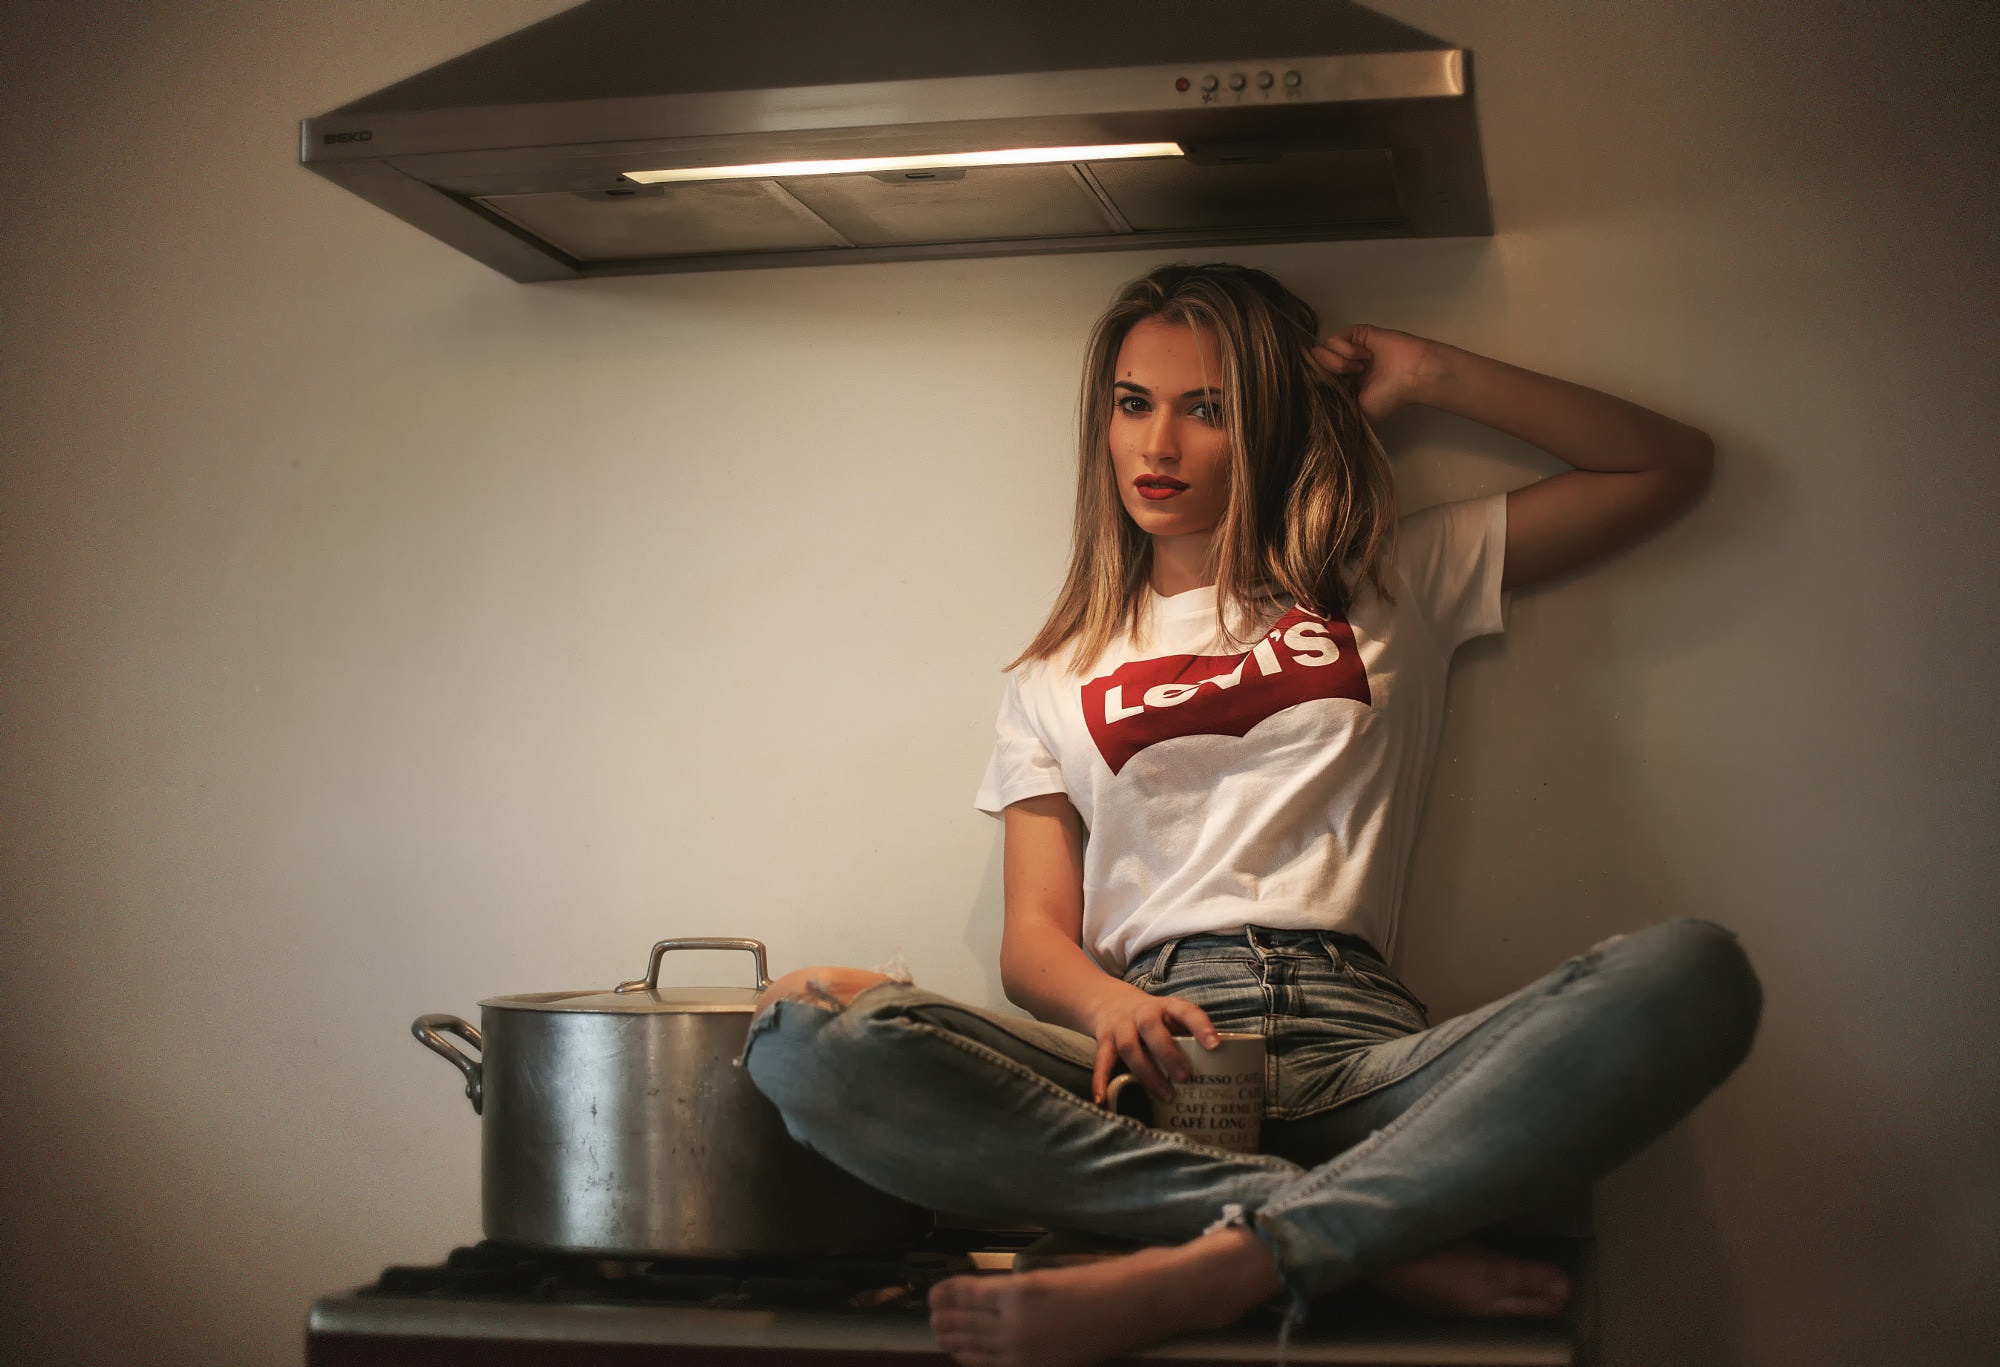 Kitchen Sitting Legs Crossed Women Model Levis Blonde Barefoot Touching Hair 2000x1367